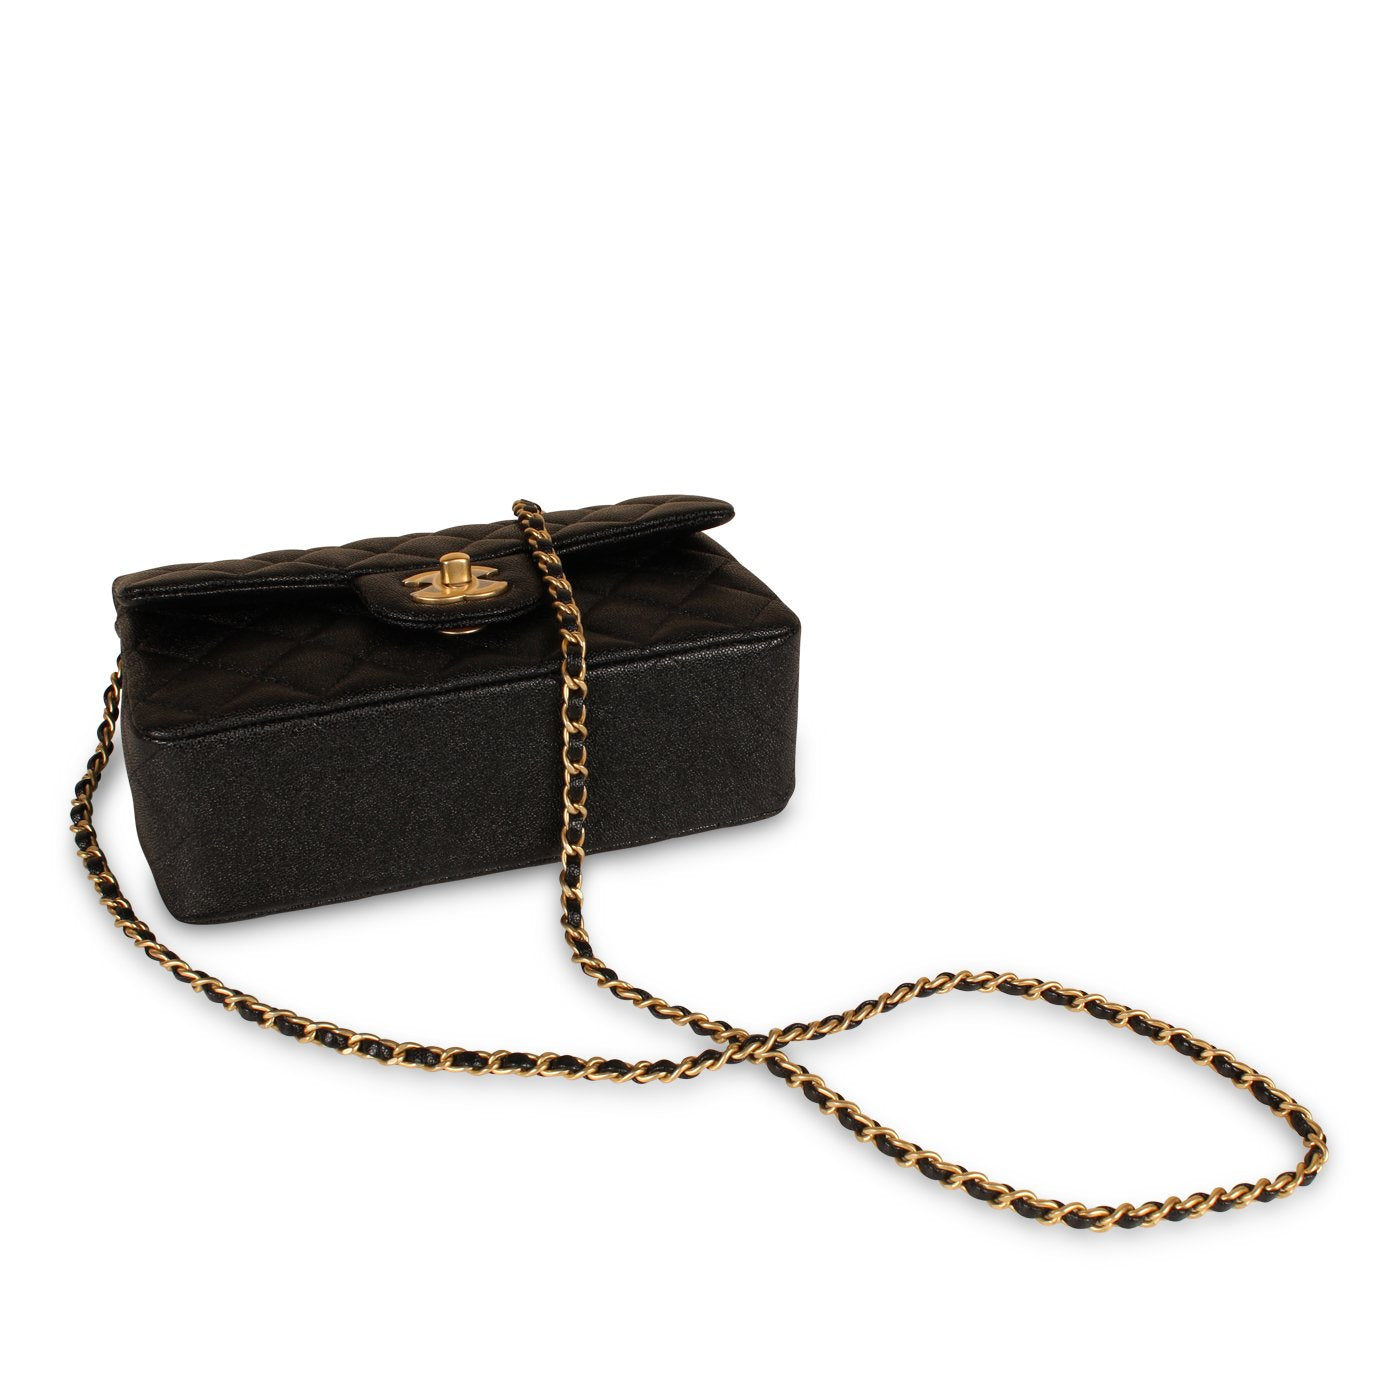 Chanel Handbag Satin Vintage Black Mini Handle Tote Bag Purse